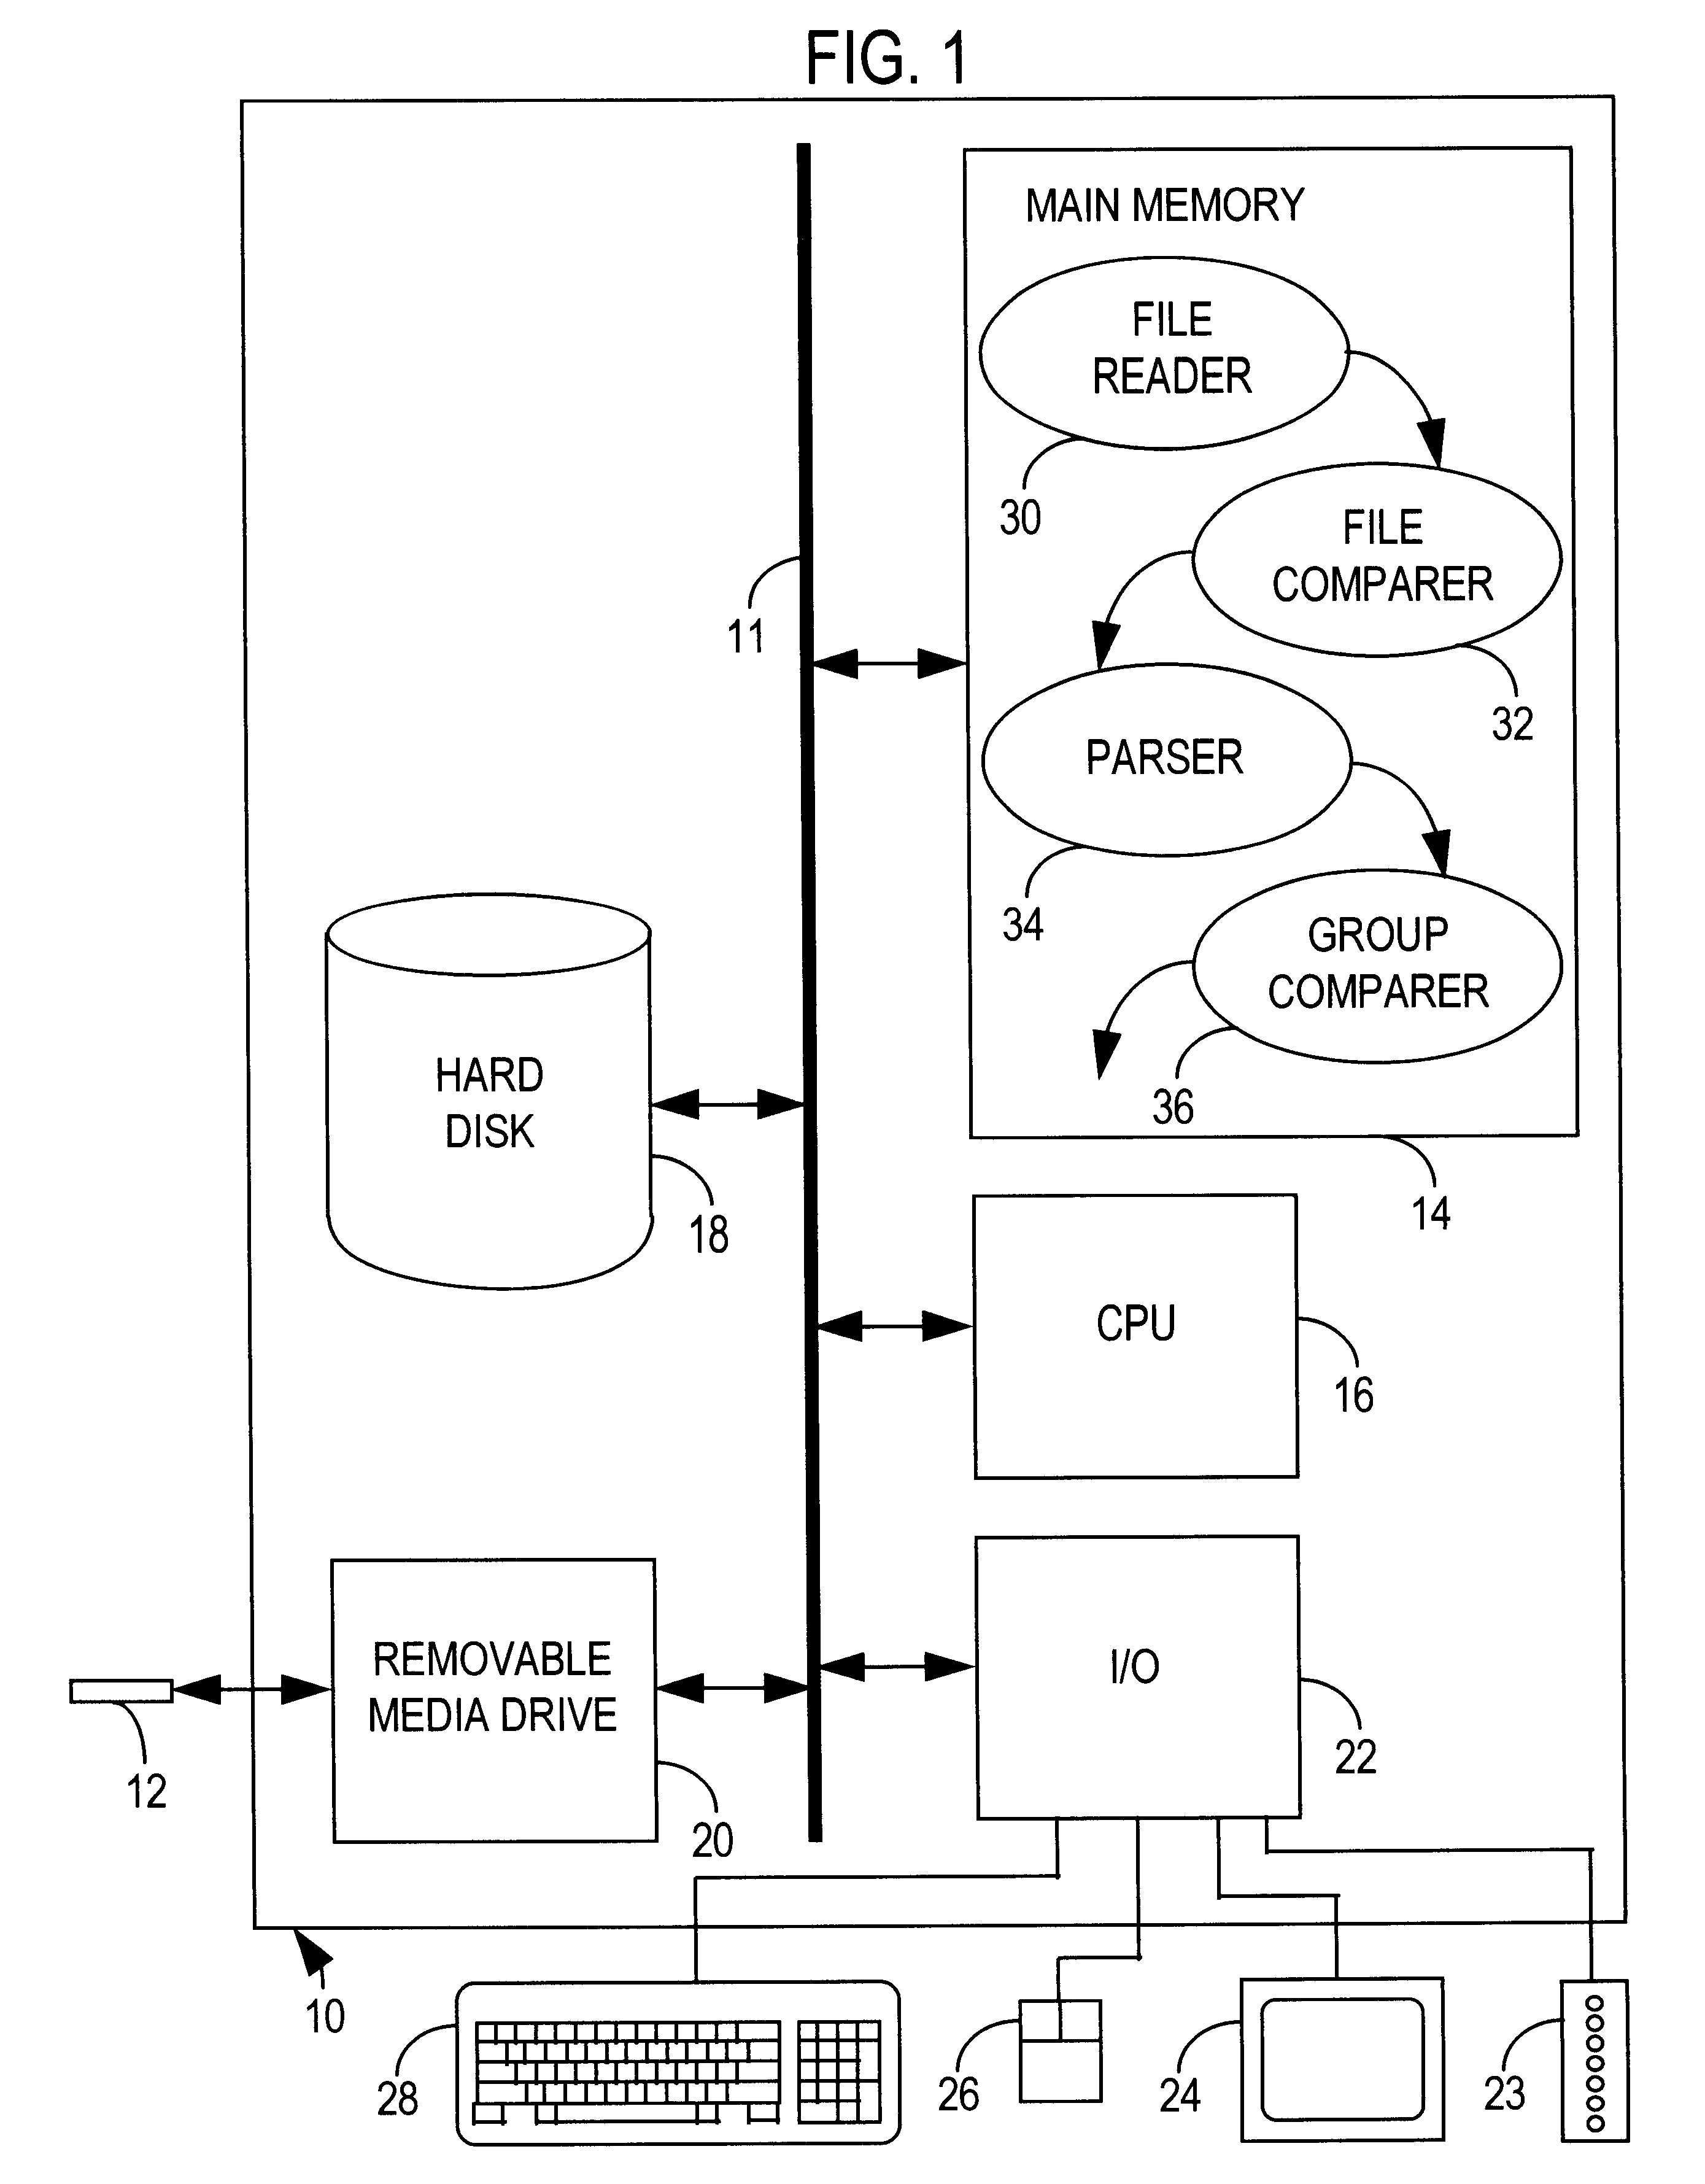 Computer file comparison method